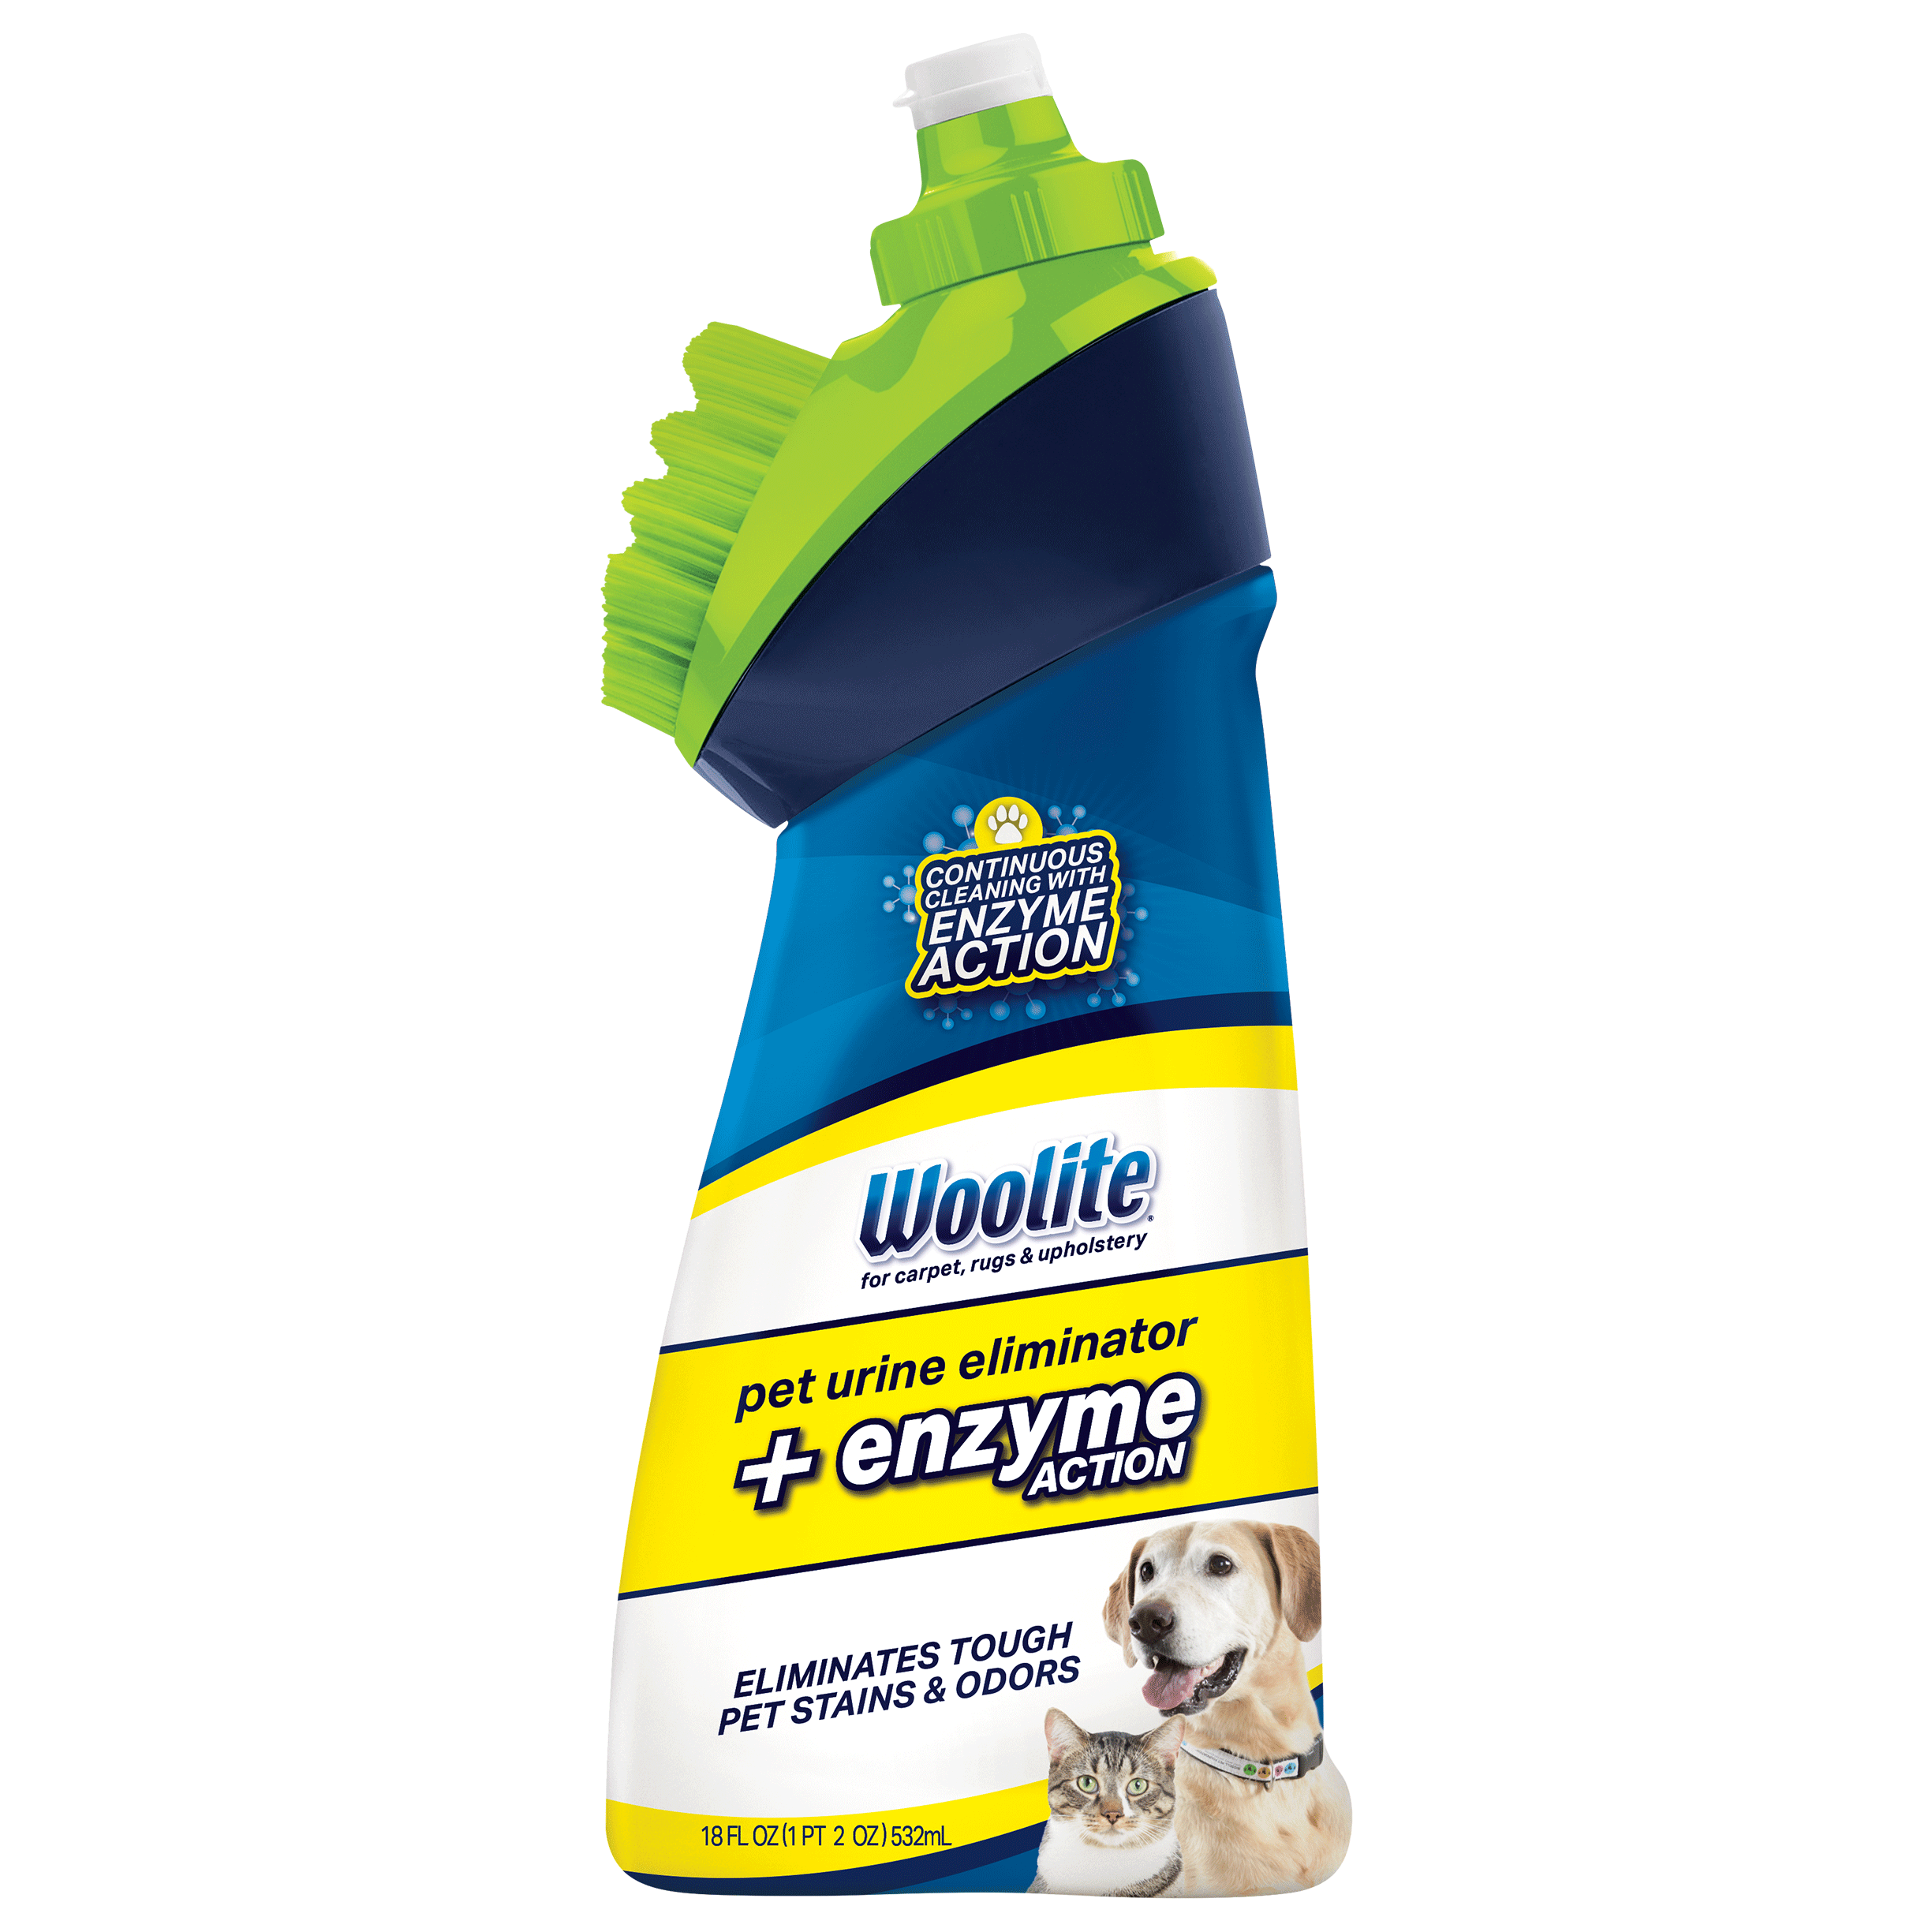 Woolite Carpet Pet Urine Eliminator